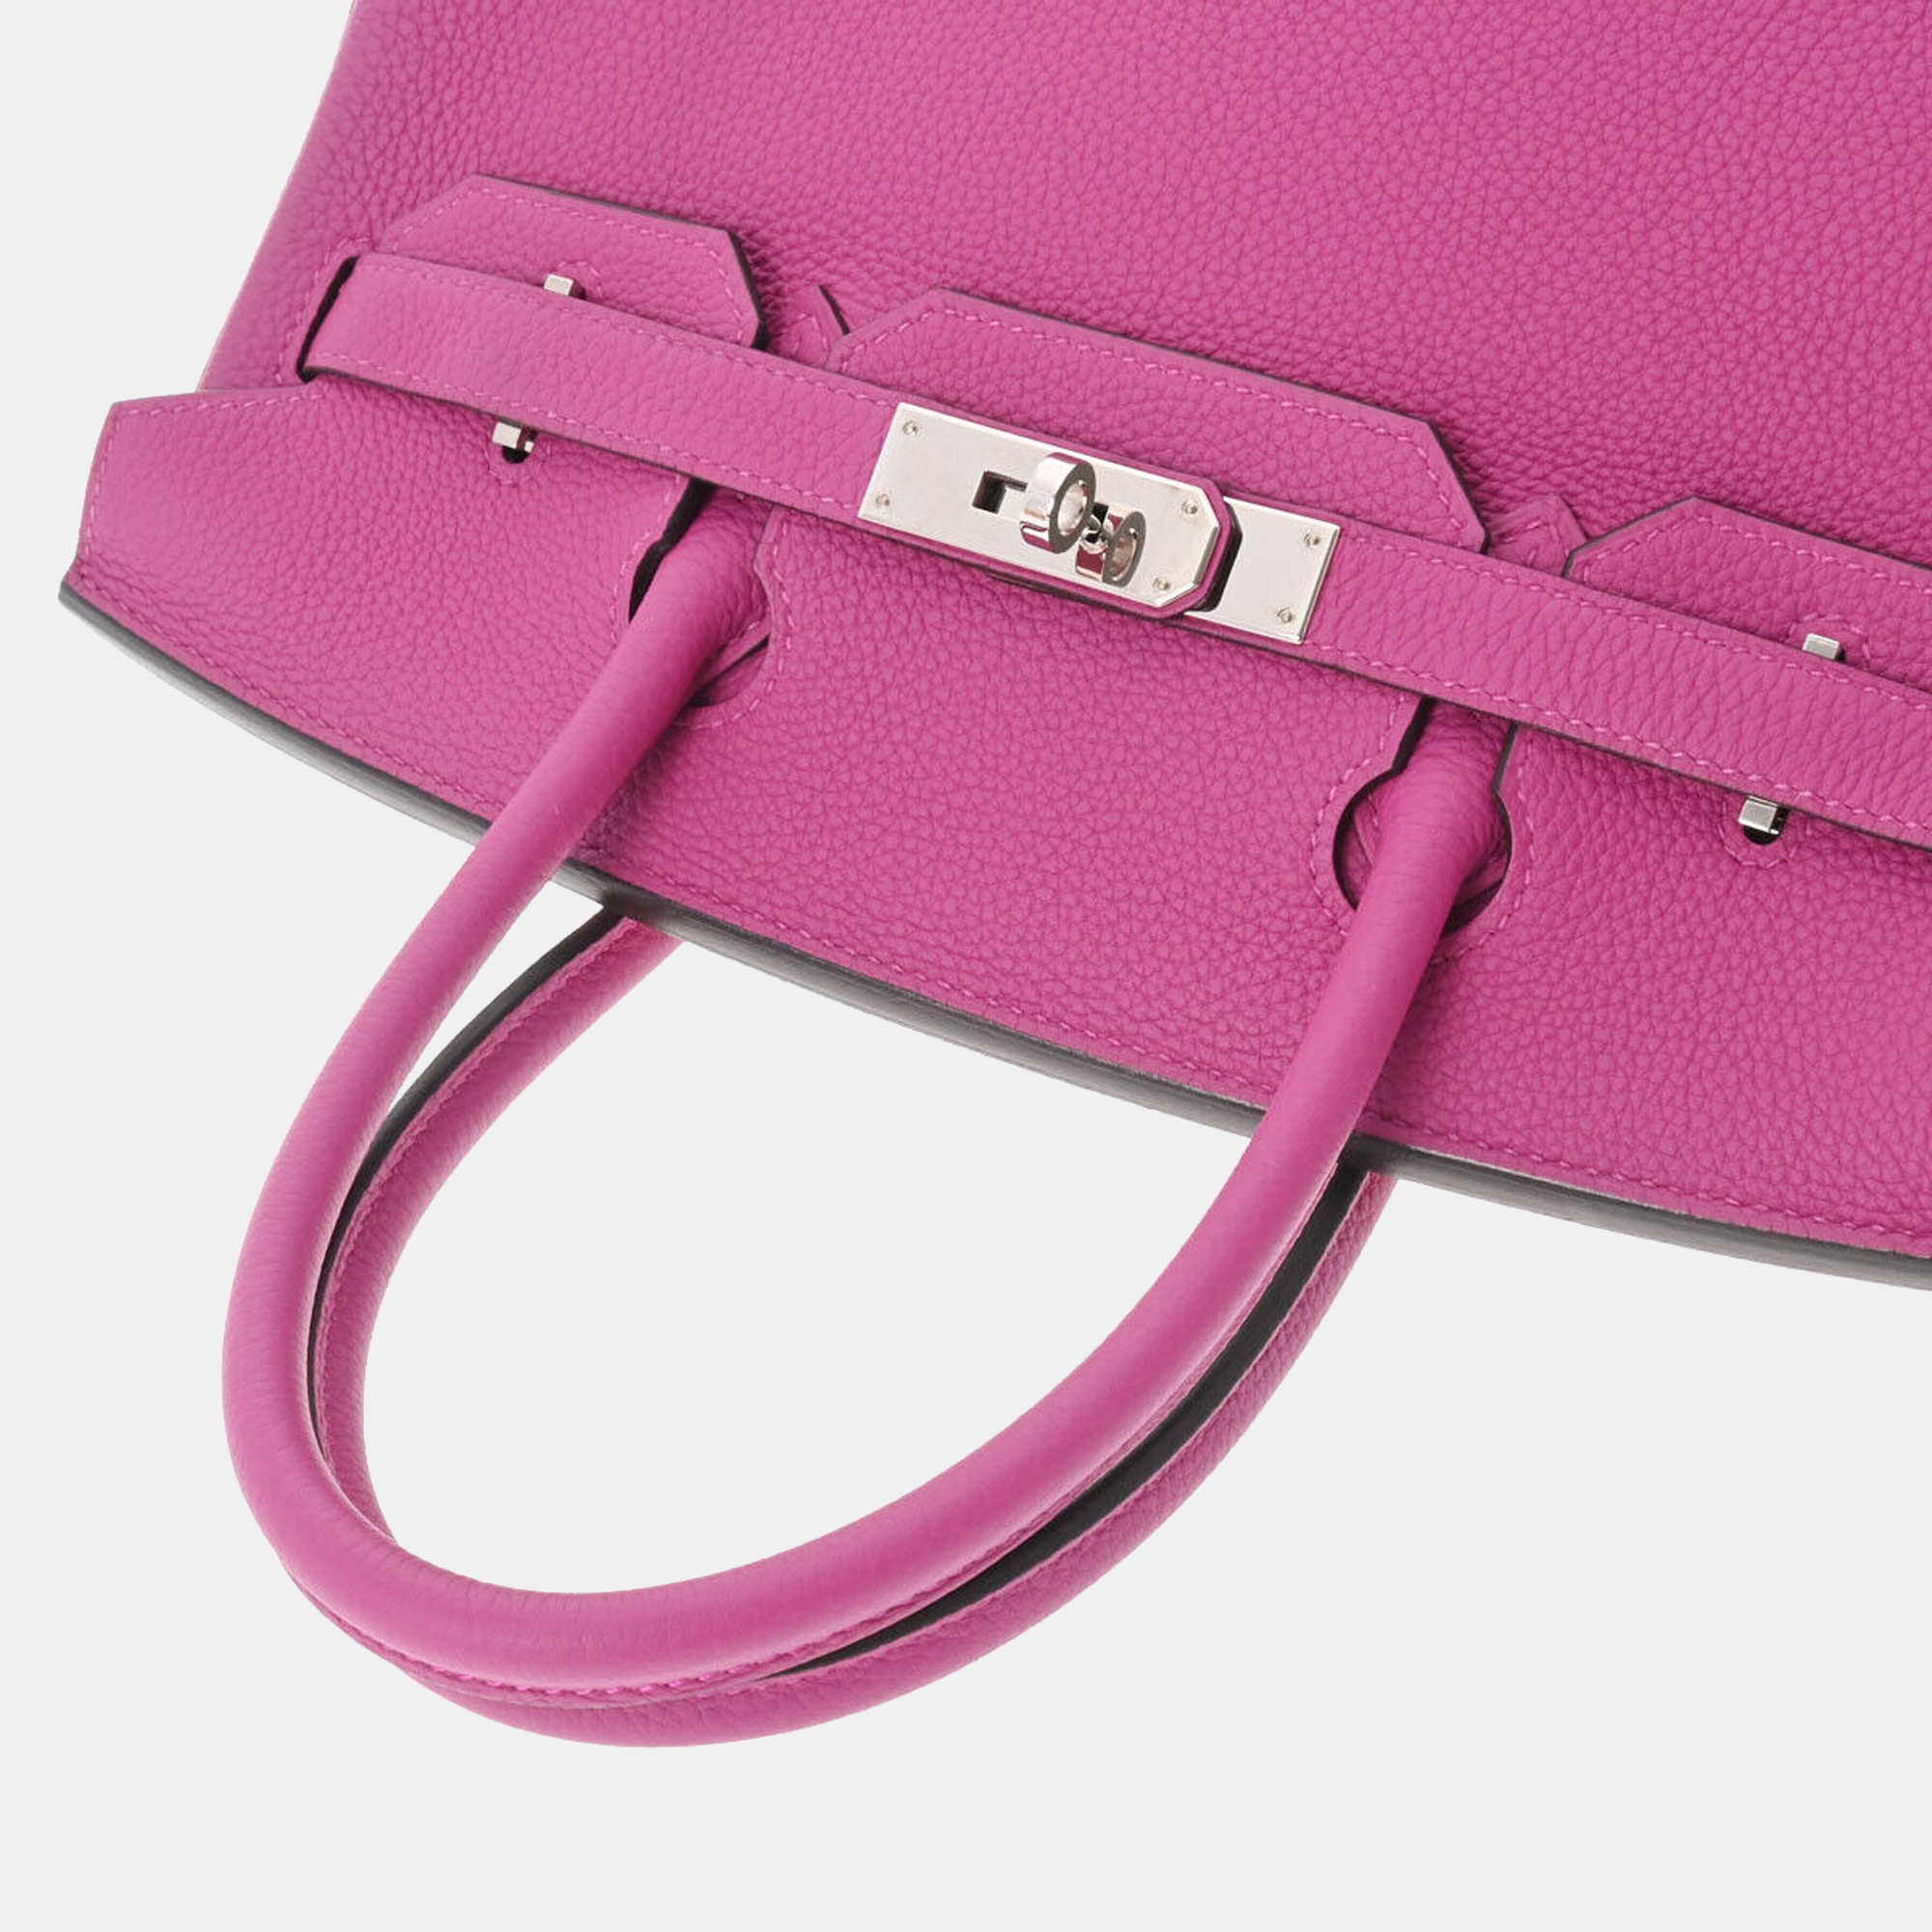 Hermes Pink Togo Leather Palladium Hardware Birkin 30 Bag